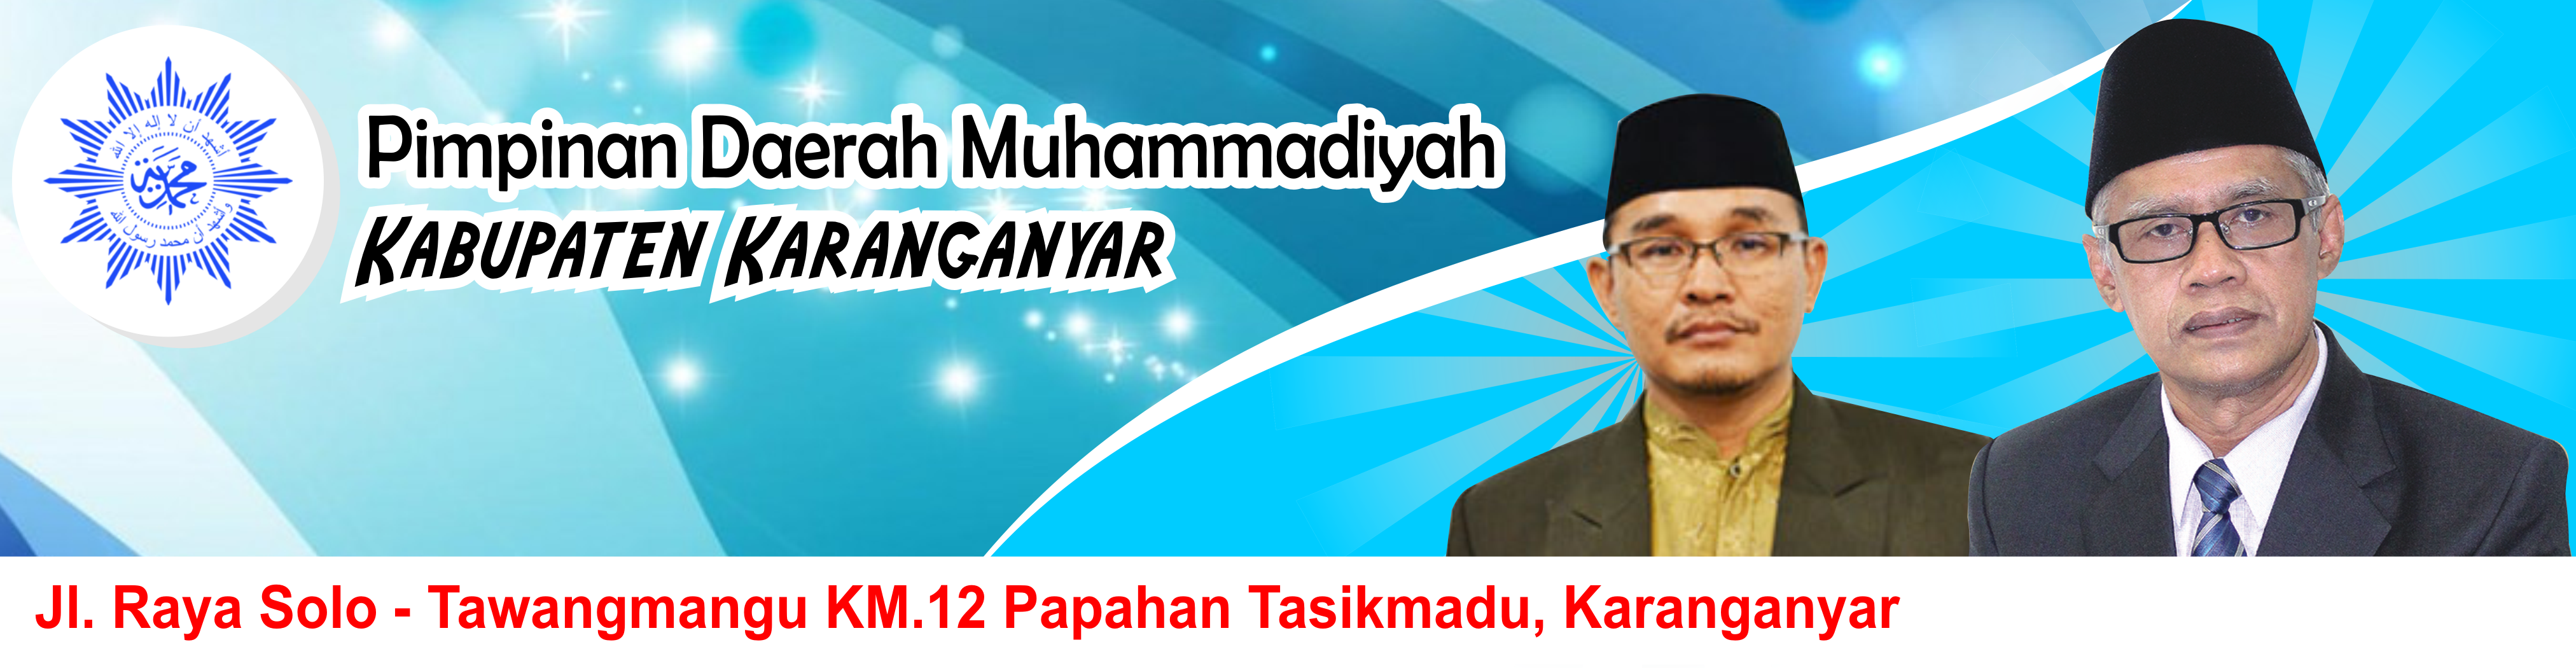 Majelis Tabligh dan Dakwah Khusus Pimpinan Daerah Muhammadiyah Kabupaten Karanganyar